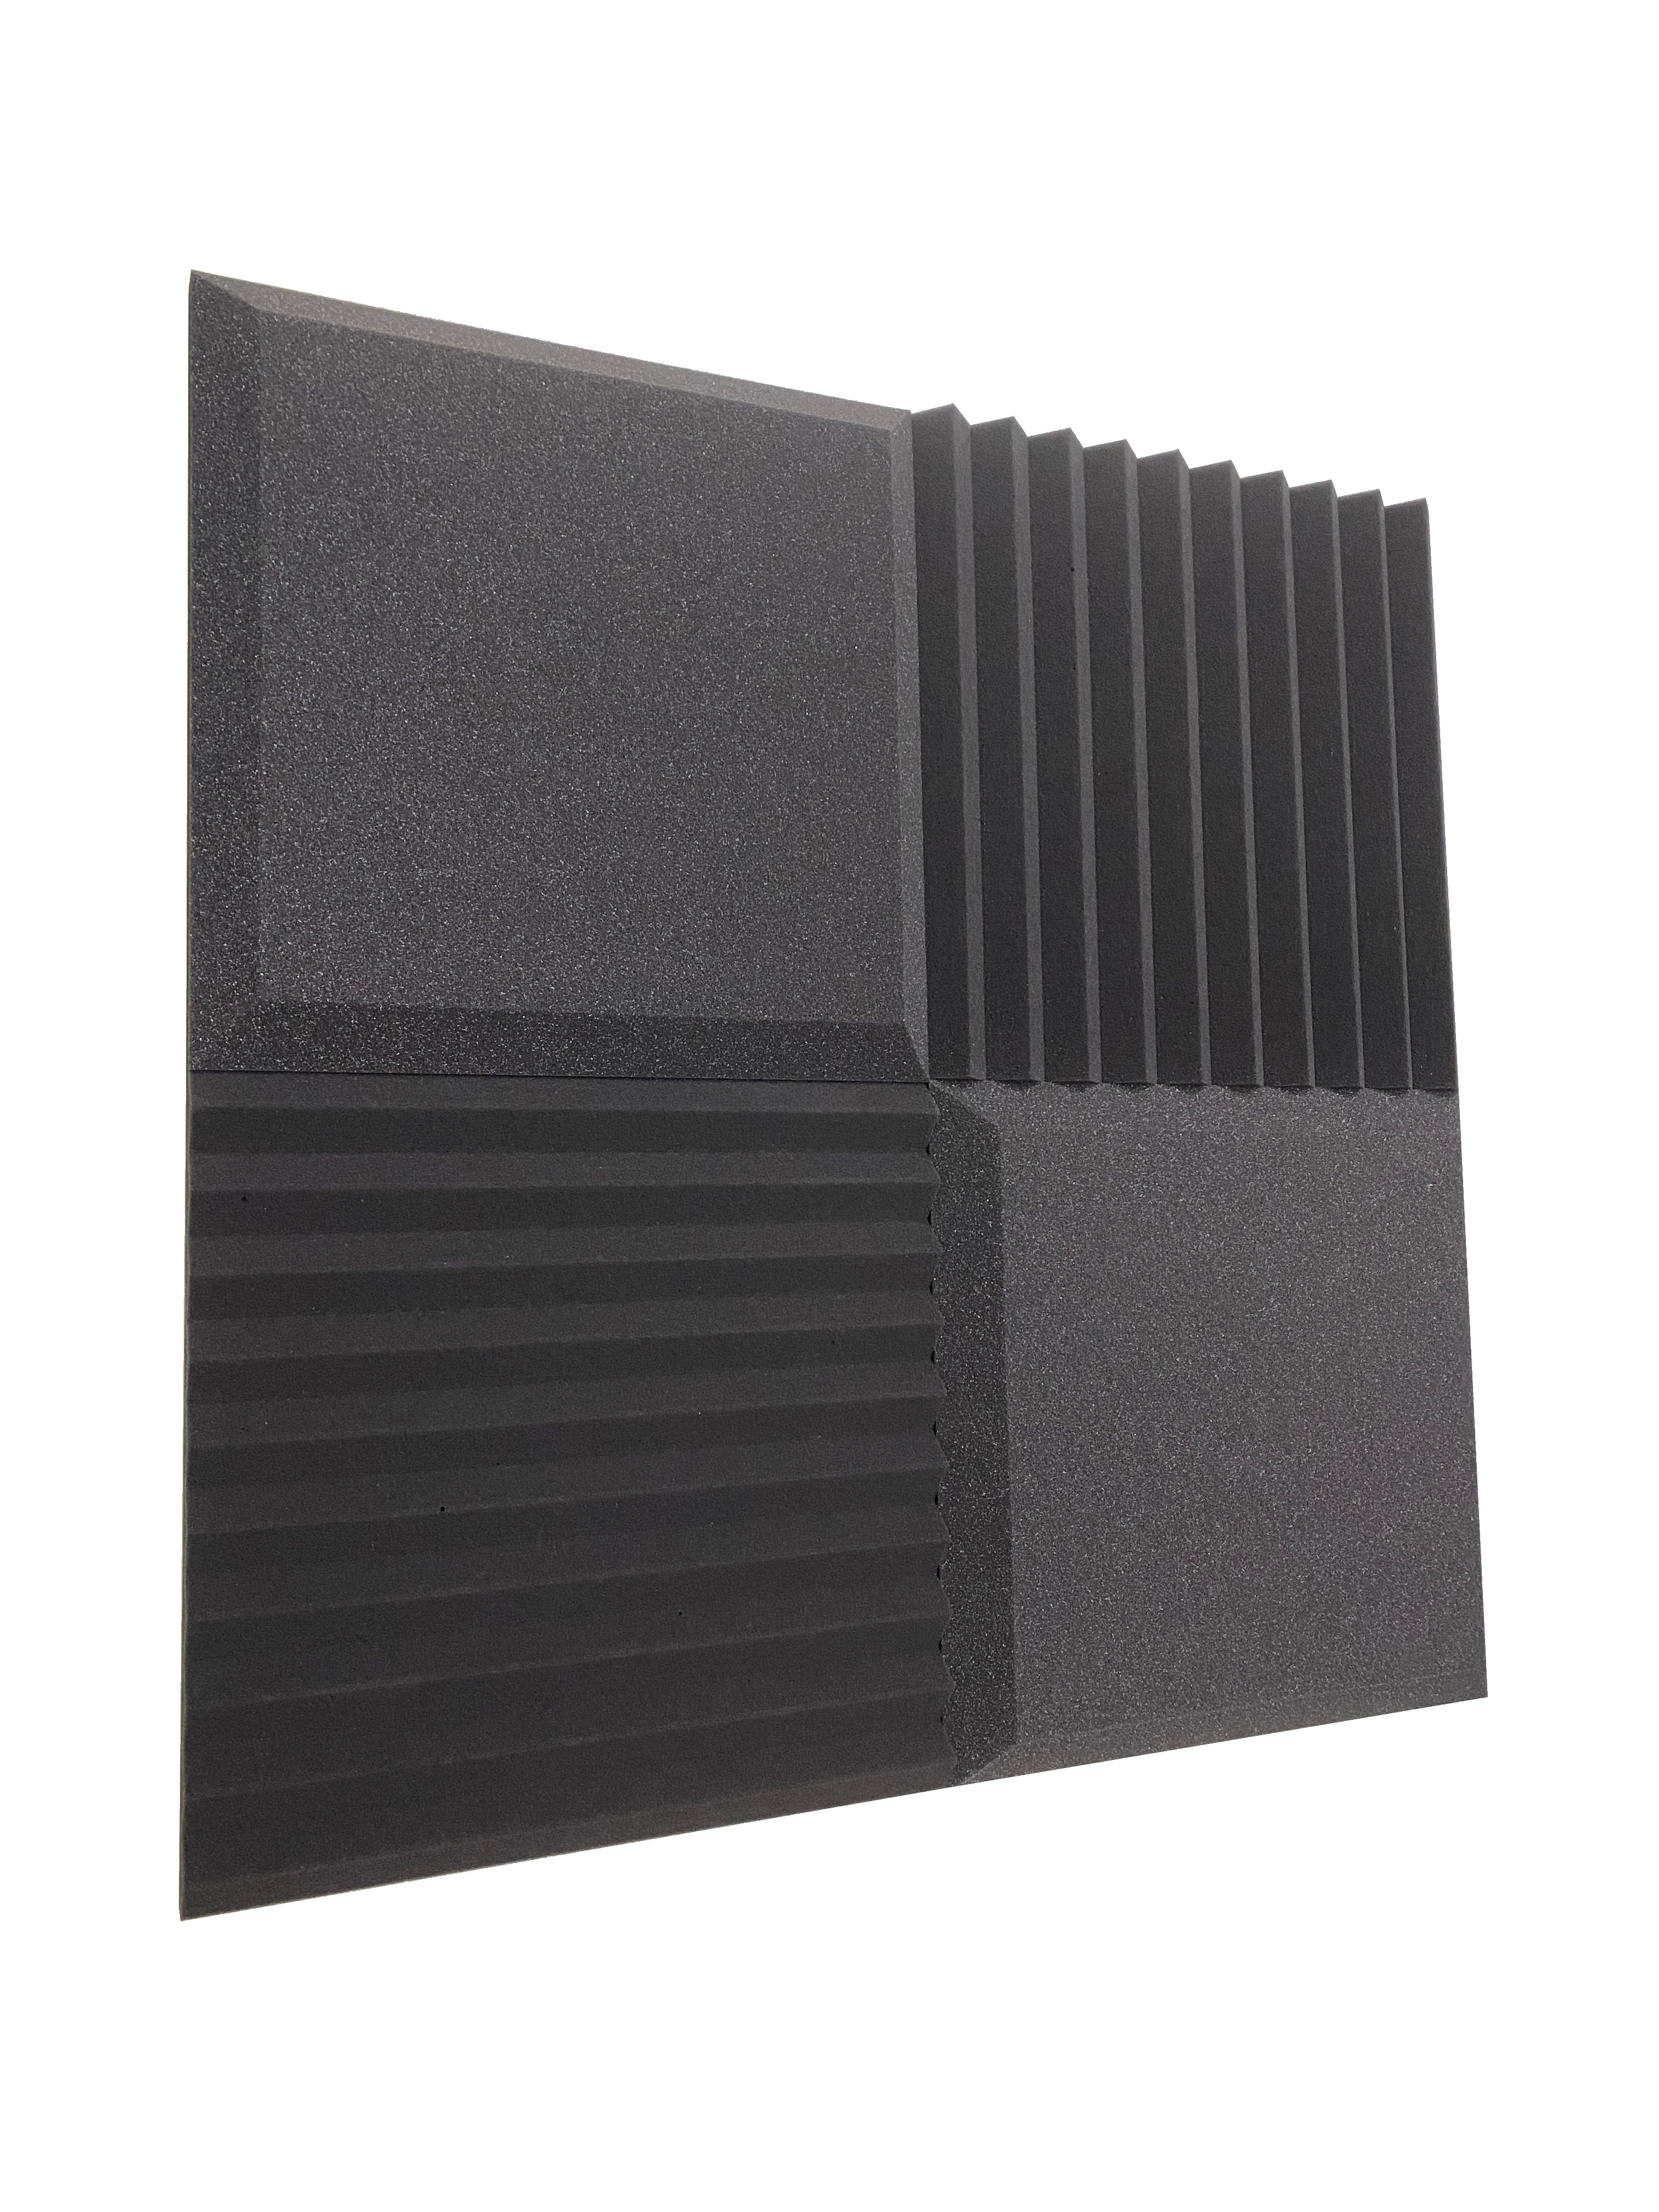 Euphonic Wedge Standard Acoustic Studio Foam Tile Pack – 24 Tiles, 3.48sqm Coverage